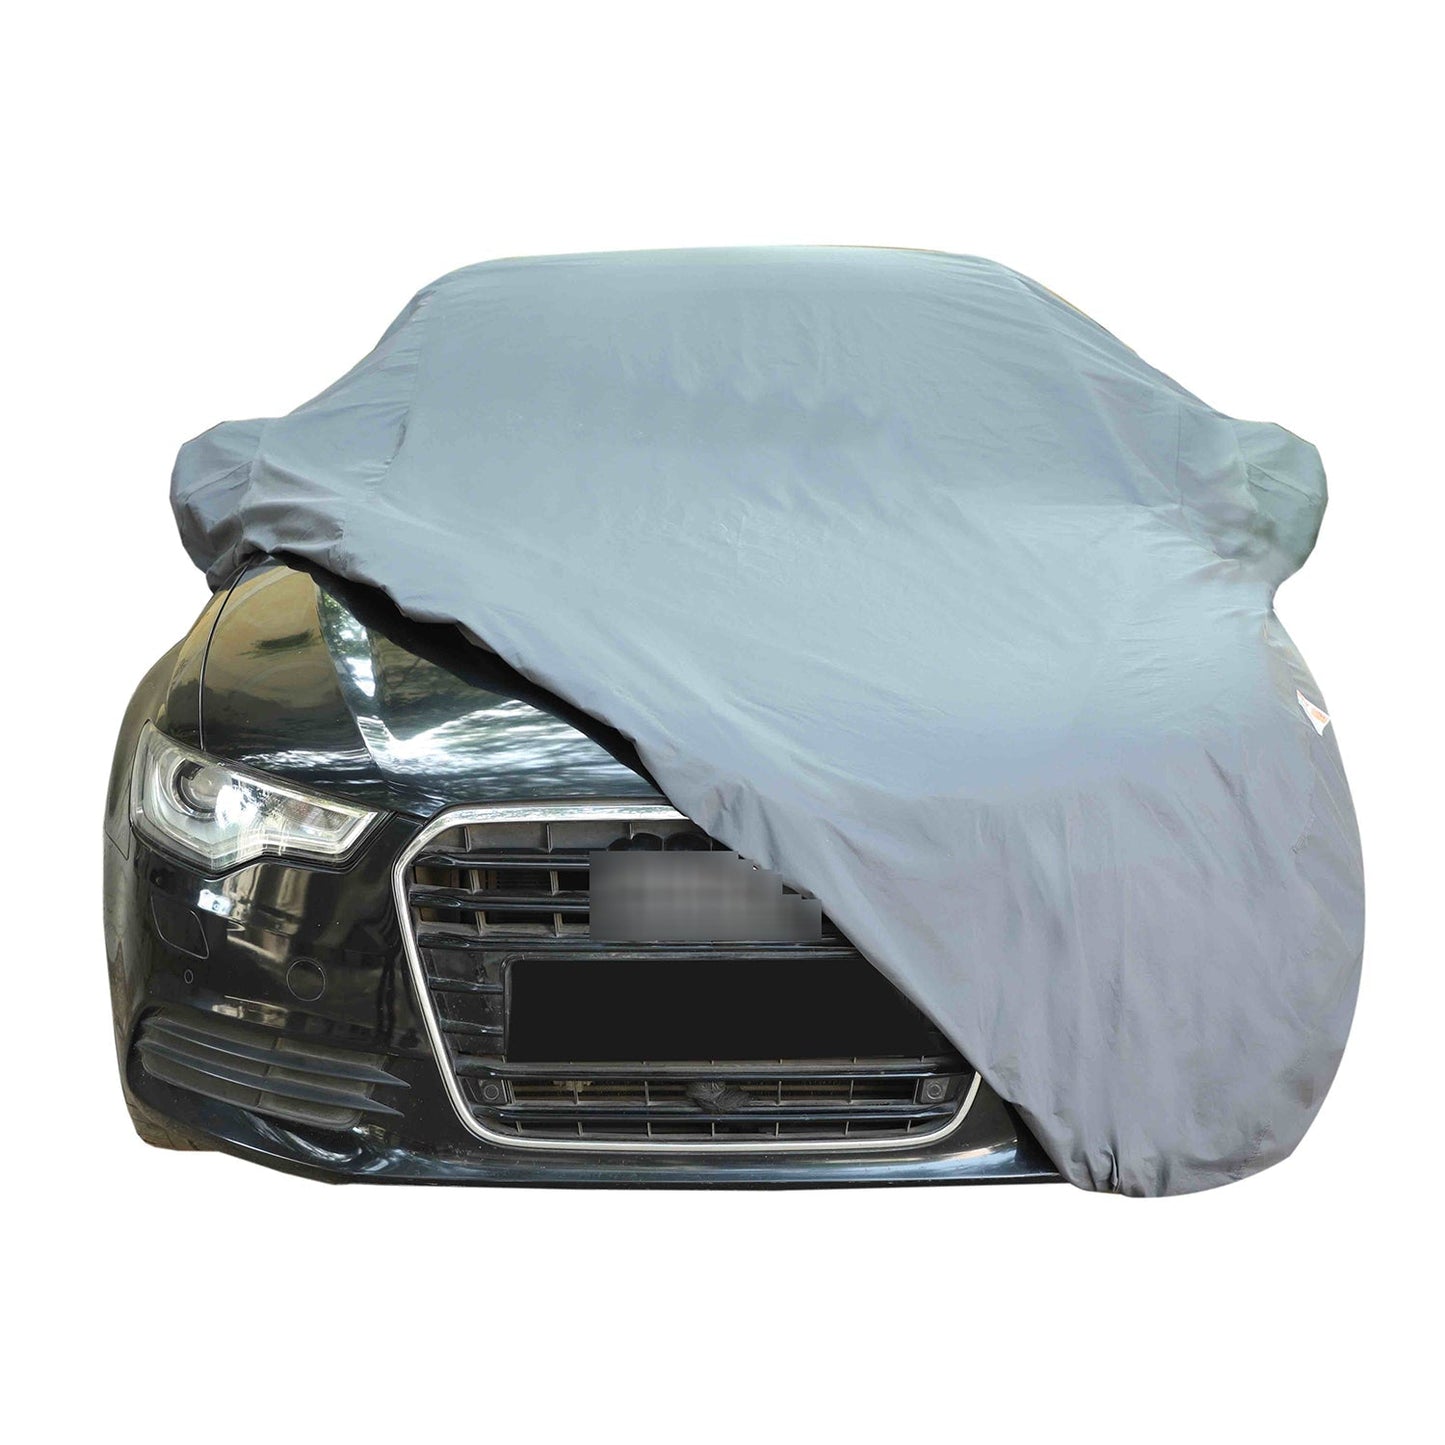 Oshotto Dark Grey 100% Anti Reflective, dustproof and Water Proof Car Body Cover with Mirror Pockets For Maruti Suzuki Grand Vitara 2022 Onwards